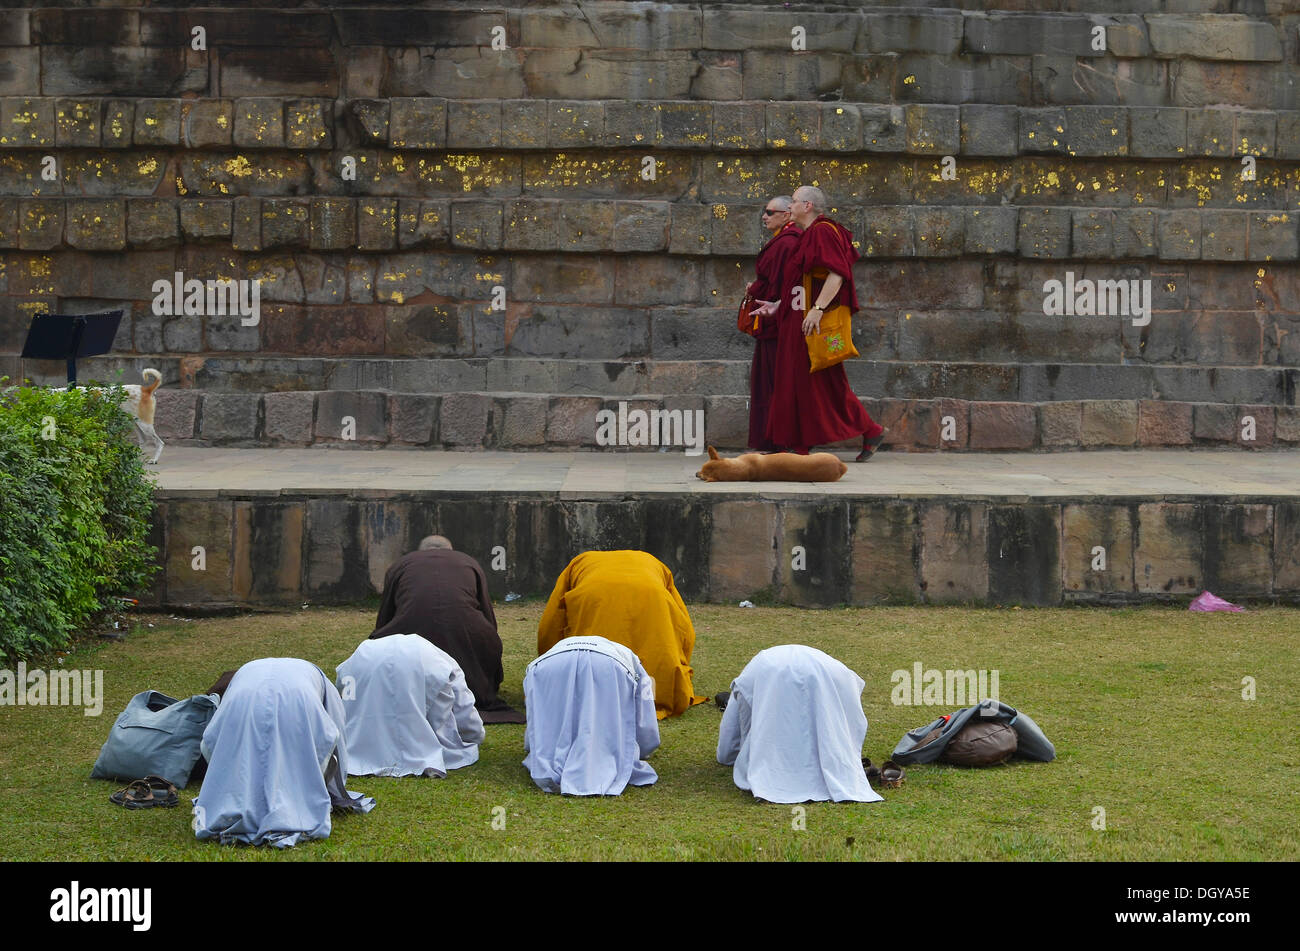 Western and Asian Buddhist nuns and monks, historical Buddhist pilgrimage site, Dhamekh Stupa, Game Park of Isipatana, Sarnath Stock Photo